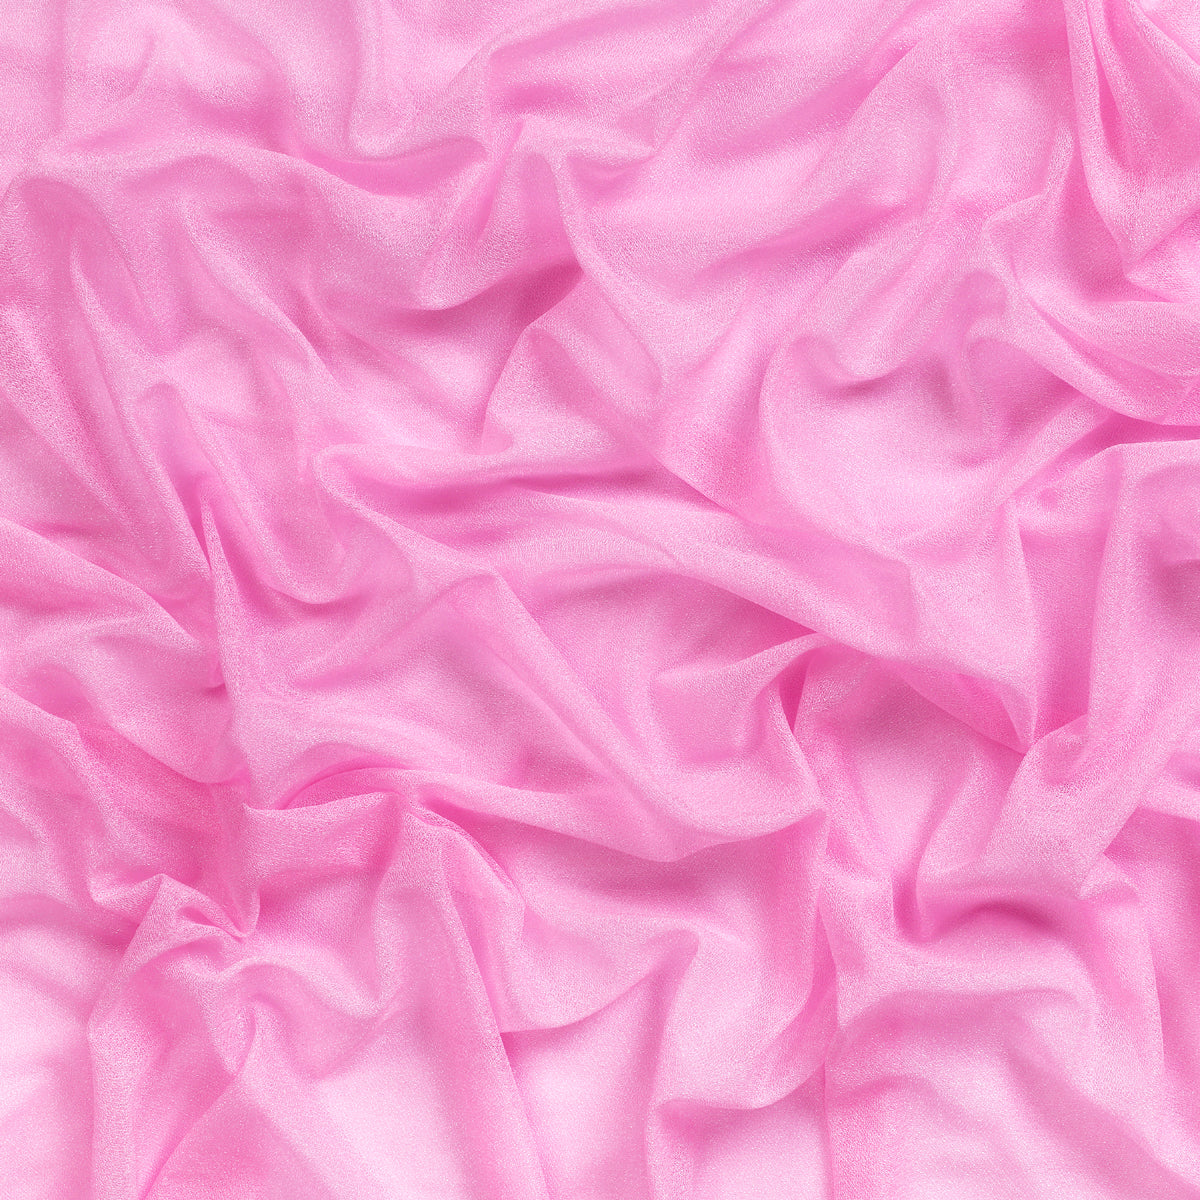 Bubblegum Pink,097f4cc2-e0cc-43c4-9d44-3c00f18e2b63